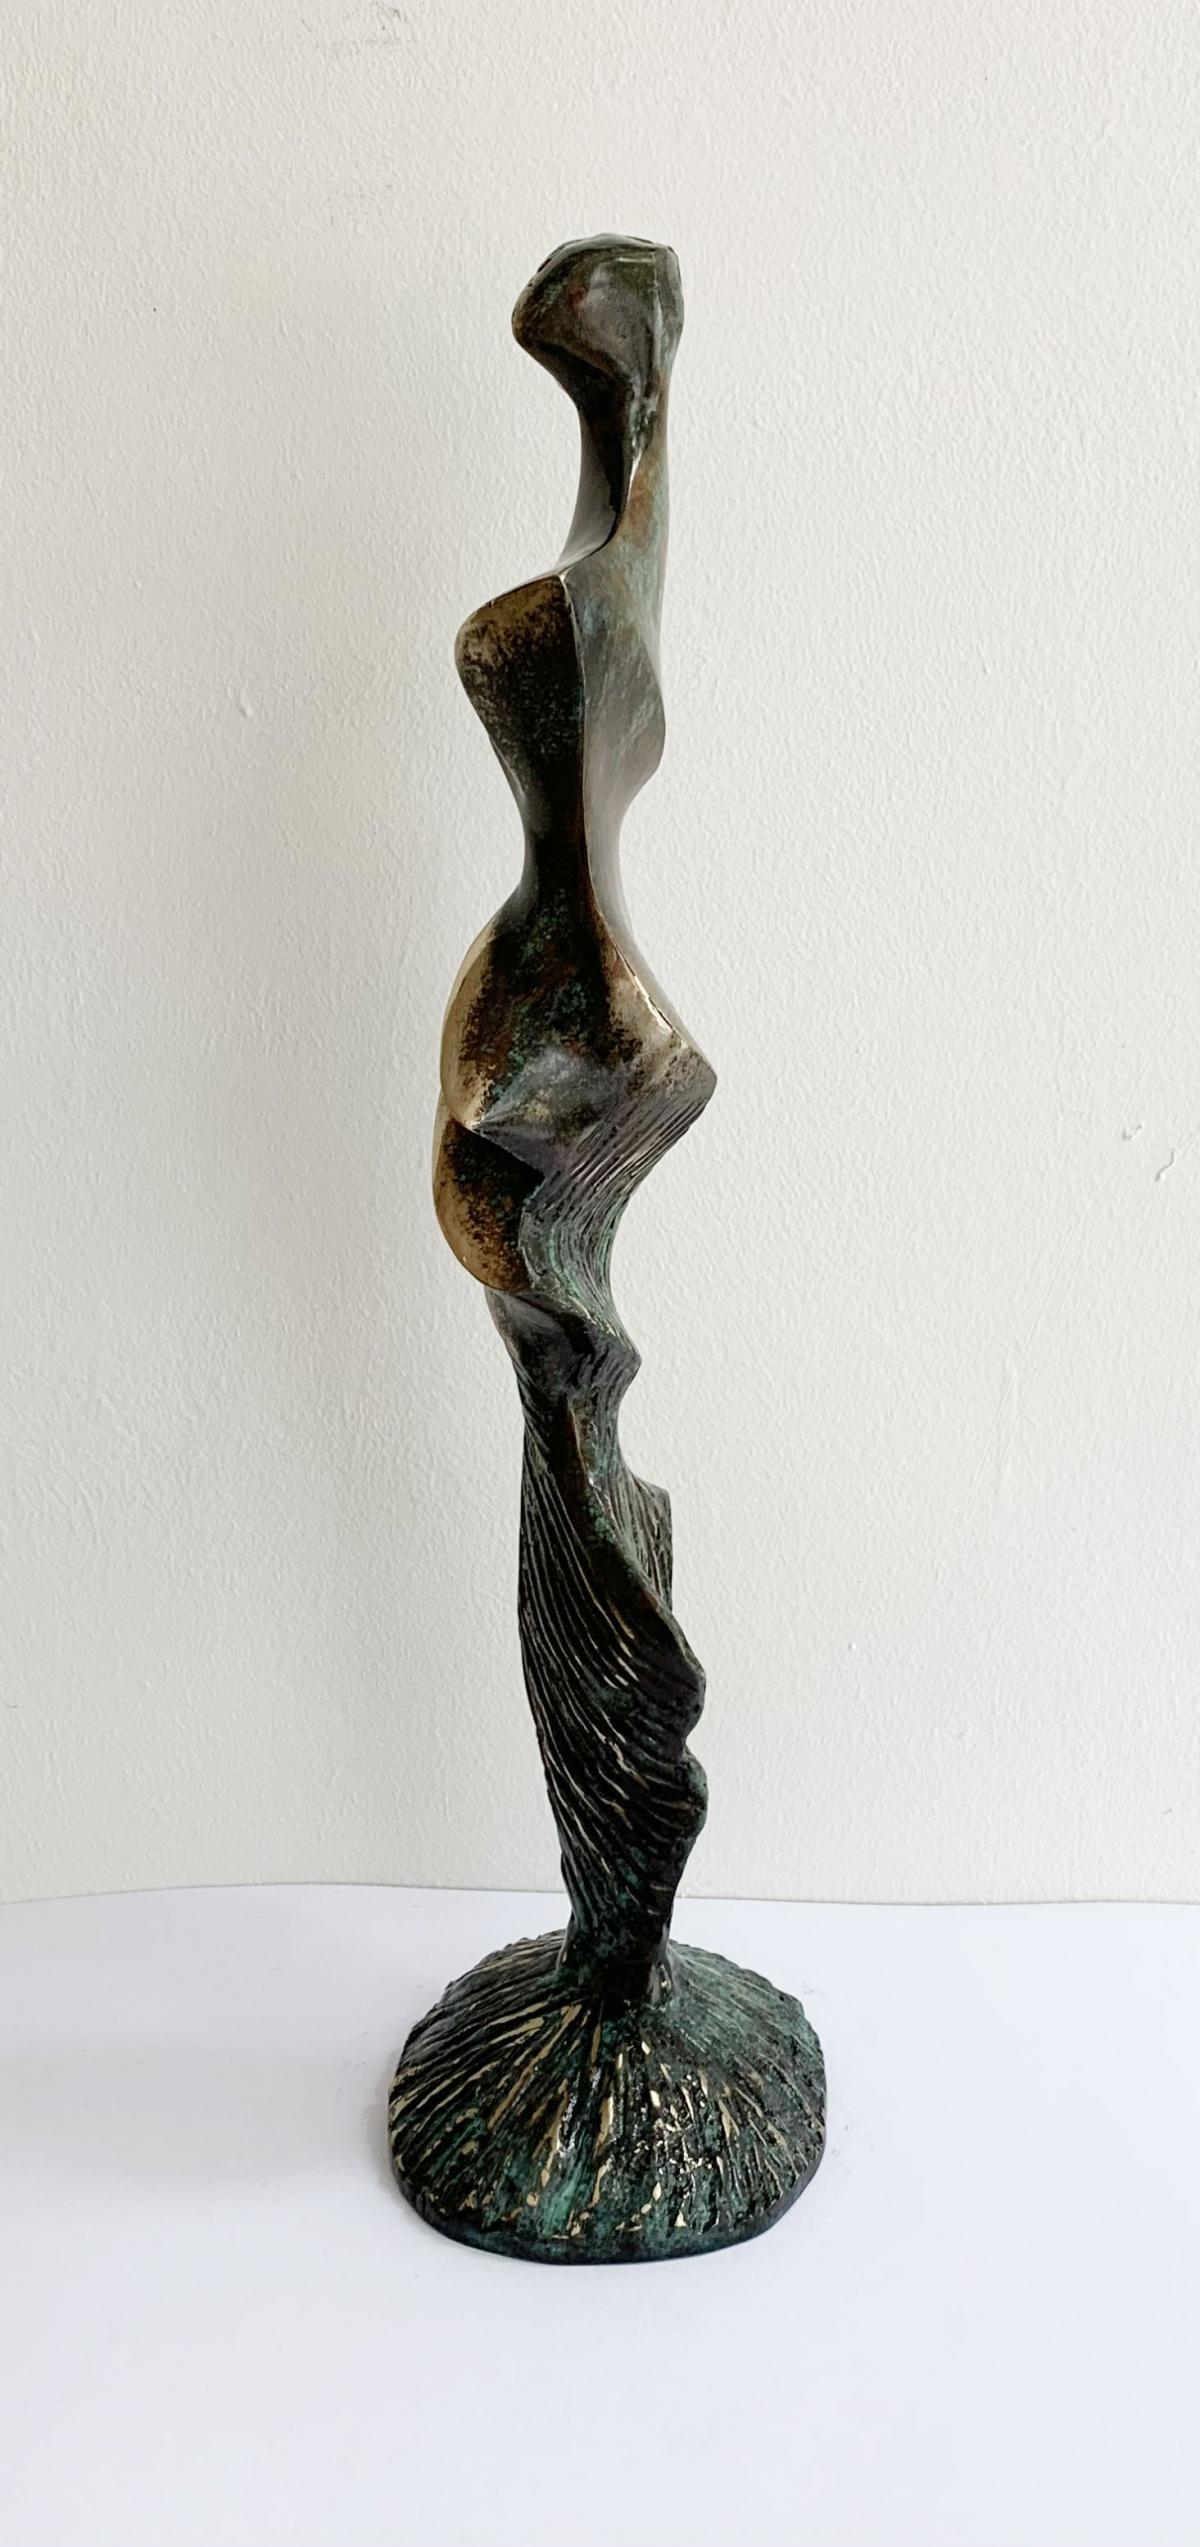 Dame V - XXI century Contemporary bronze sculpture, Abstract & figurative - Gold Figurative Sculpture by Stanisław Wysocki